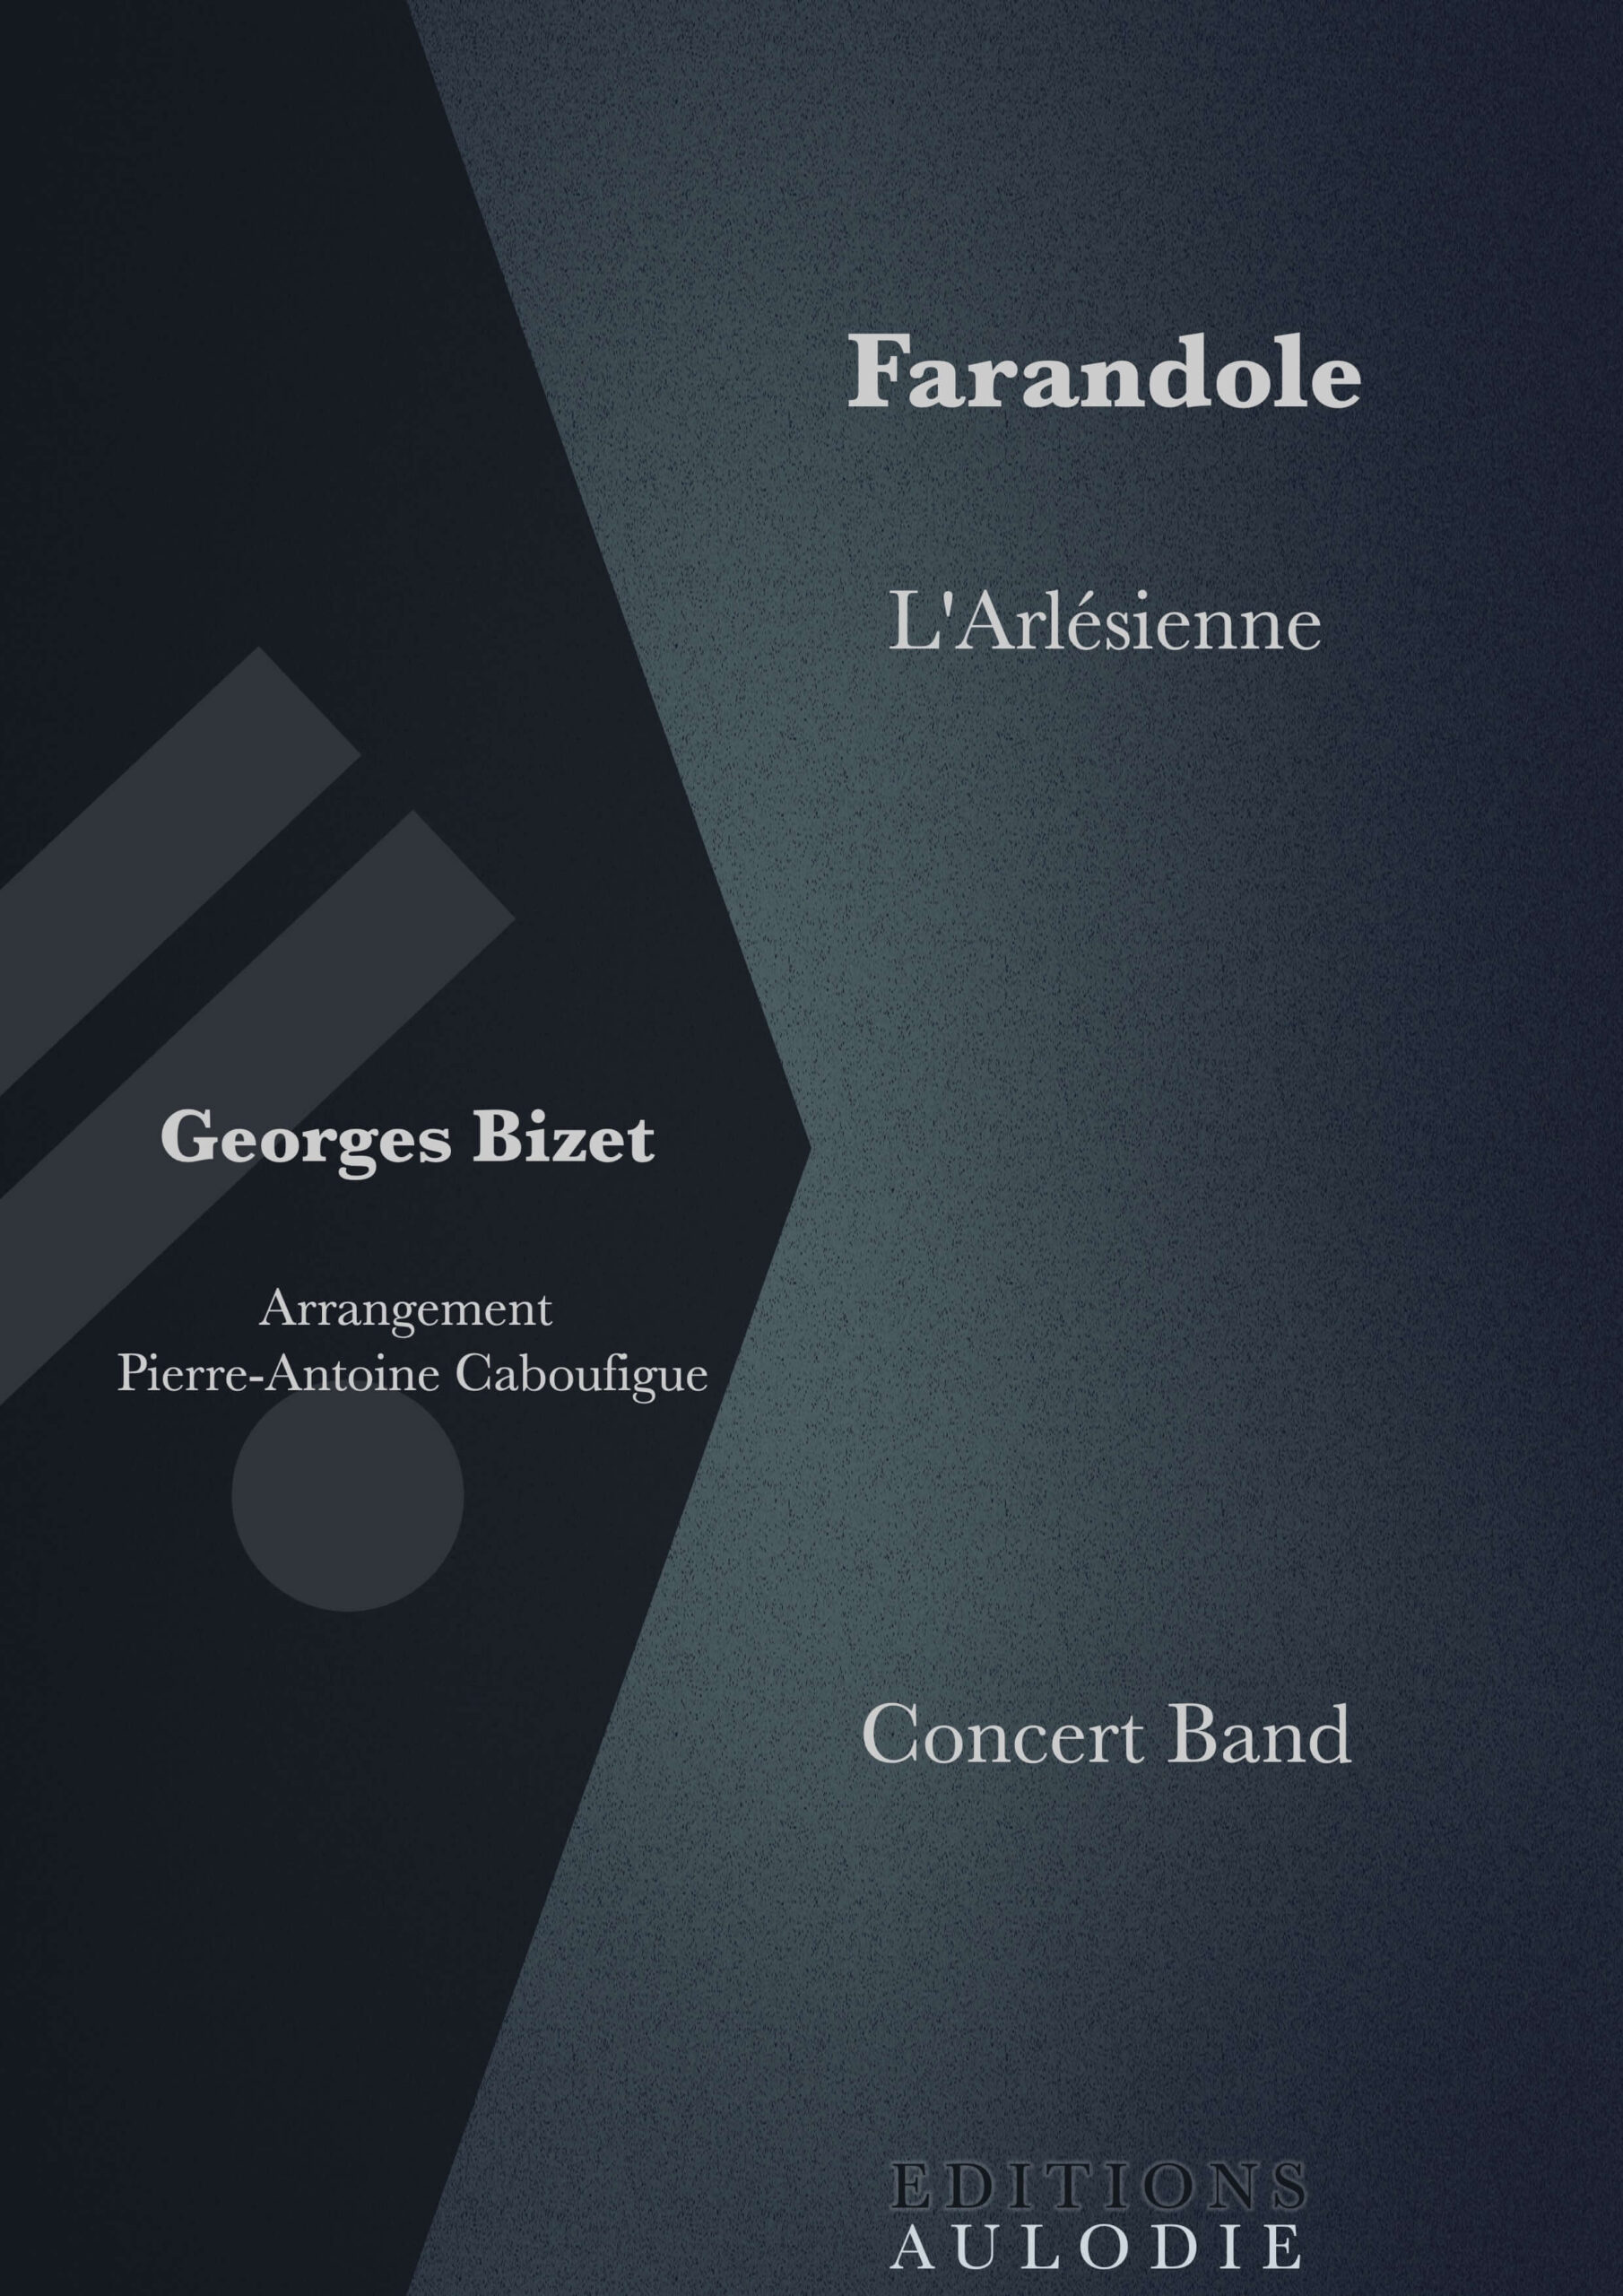 EA01031-Farandole-LArlesienne-Georges_Bizet-Concert_Band